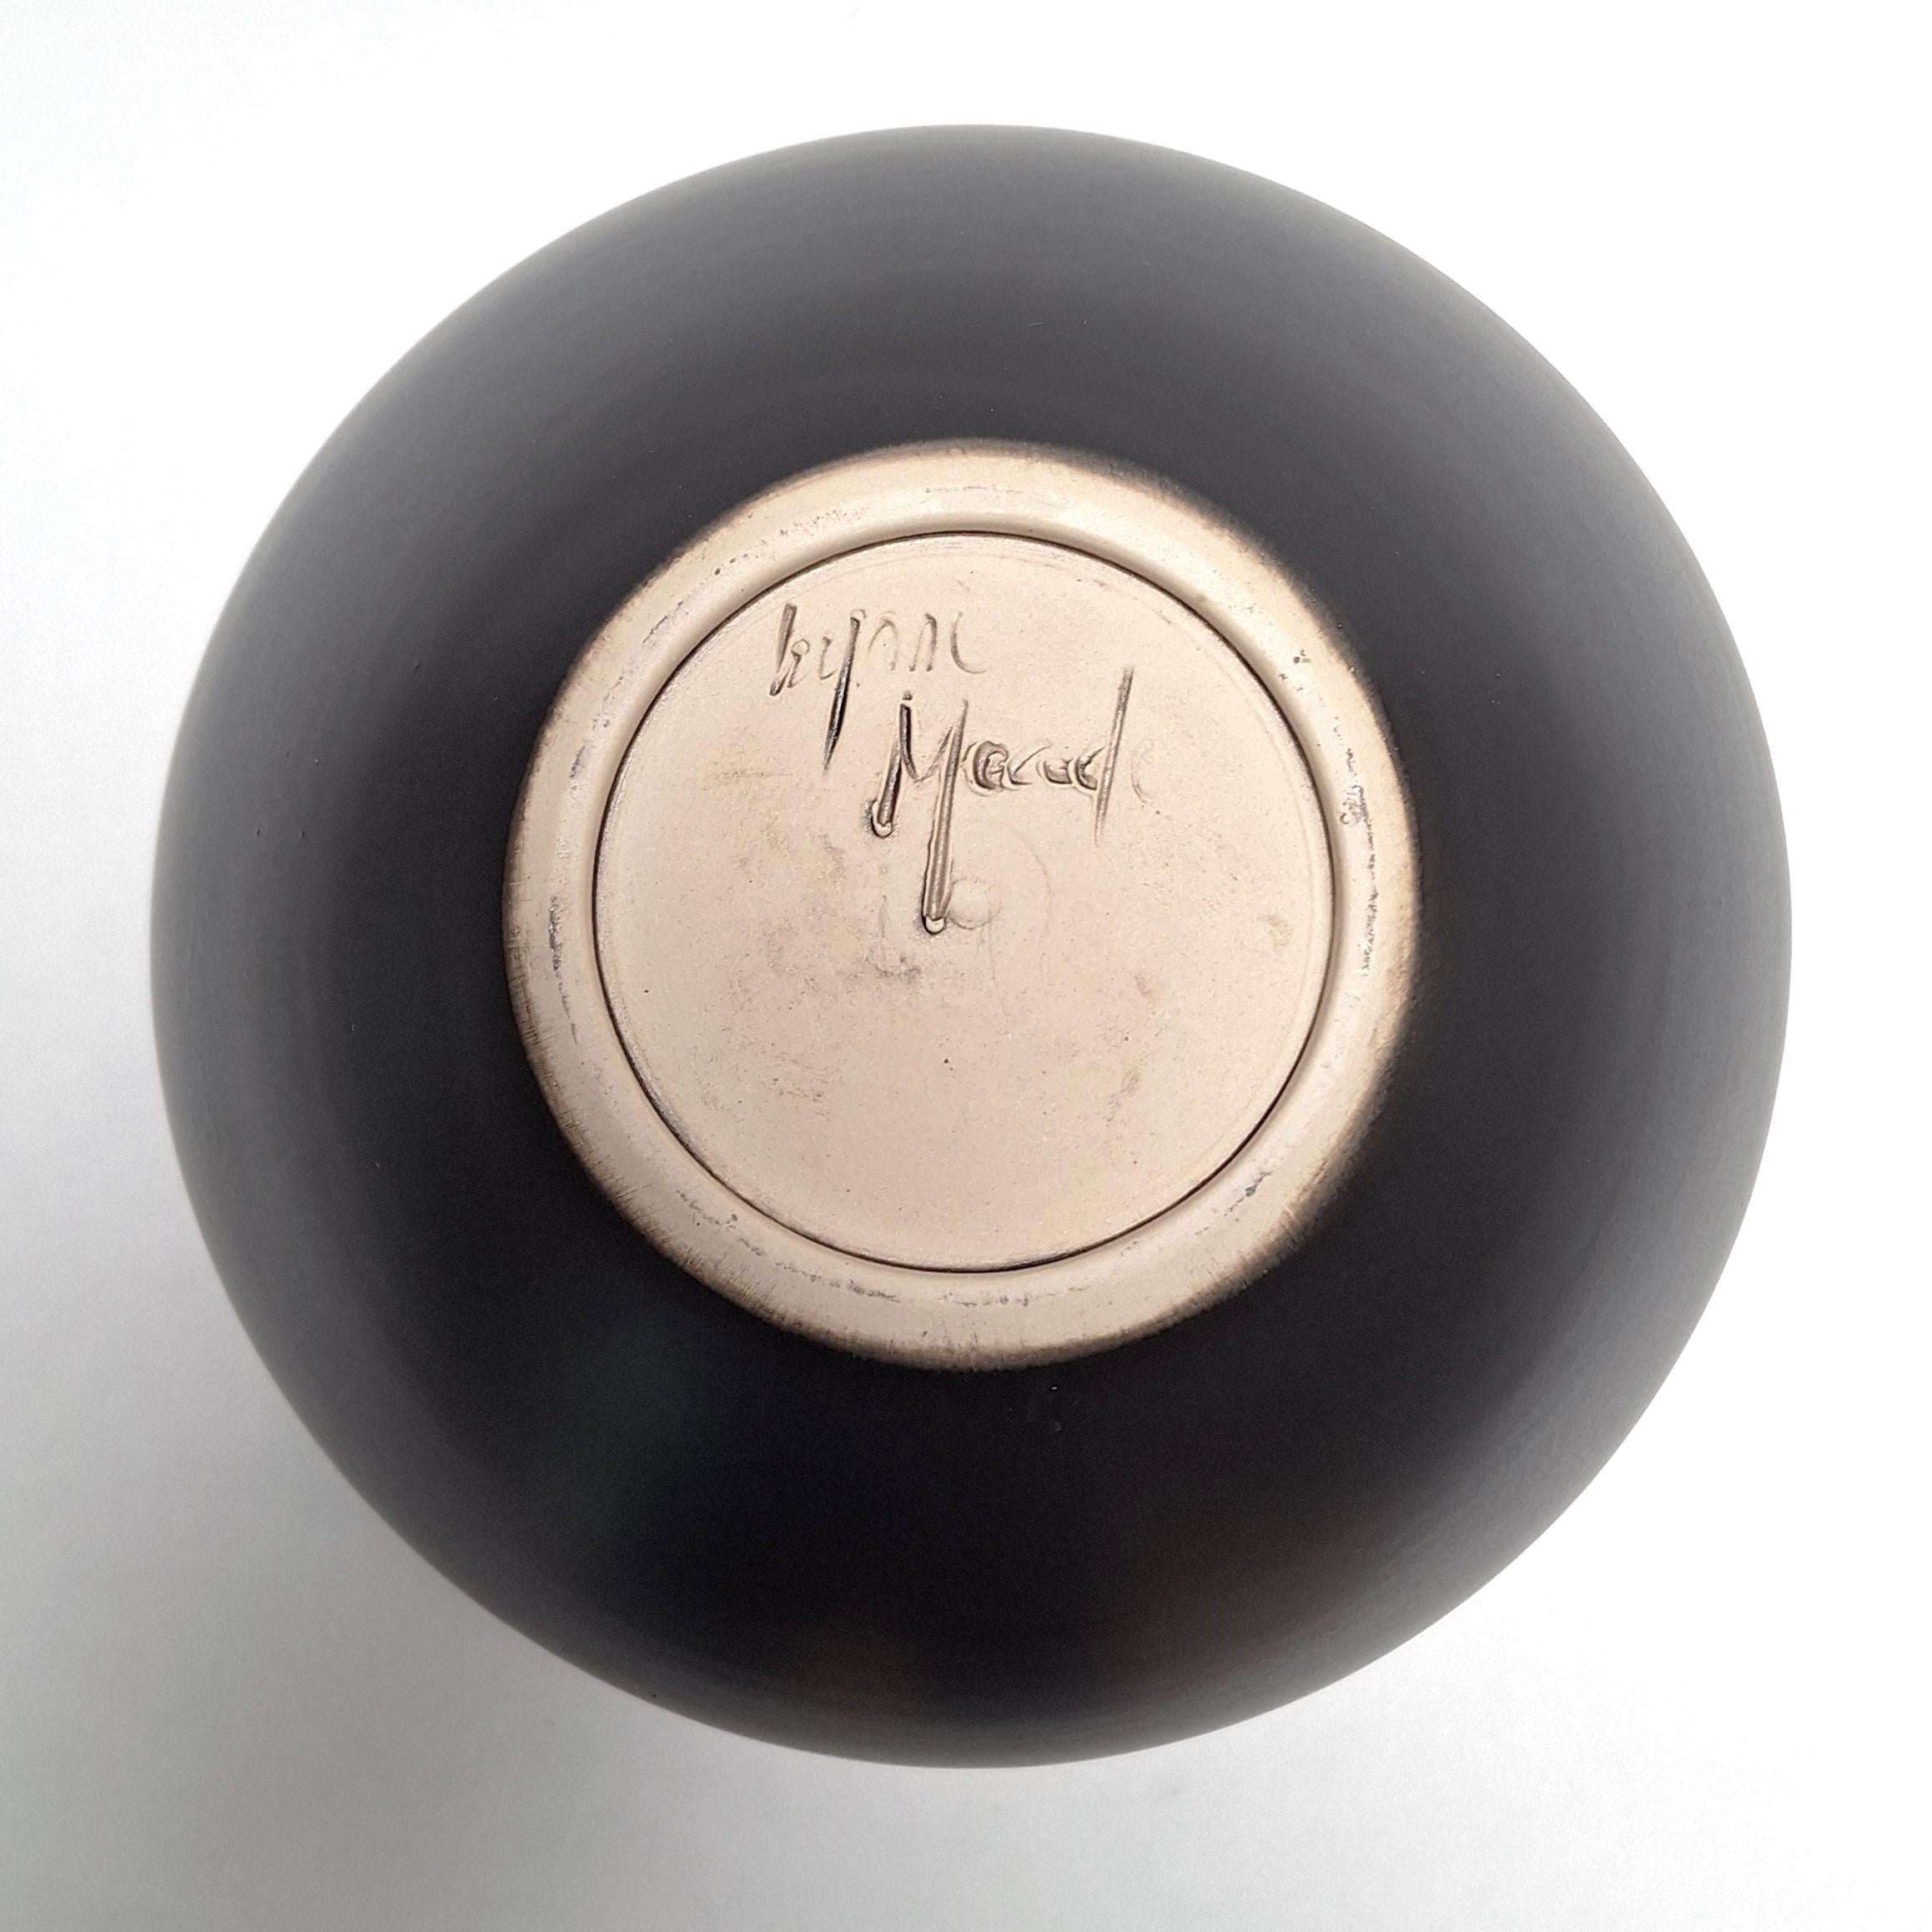 Orb Demi Round Lace Black - contemporary modern ceramic vessel object For Sale 2